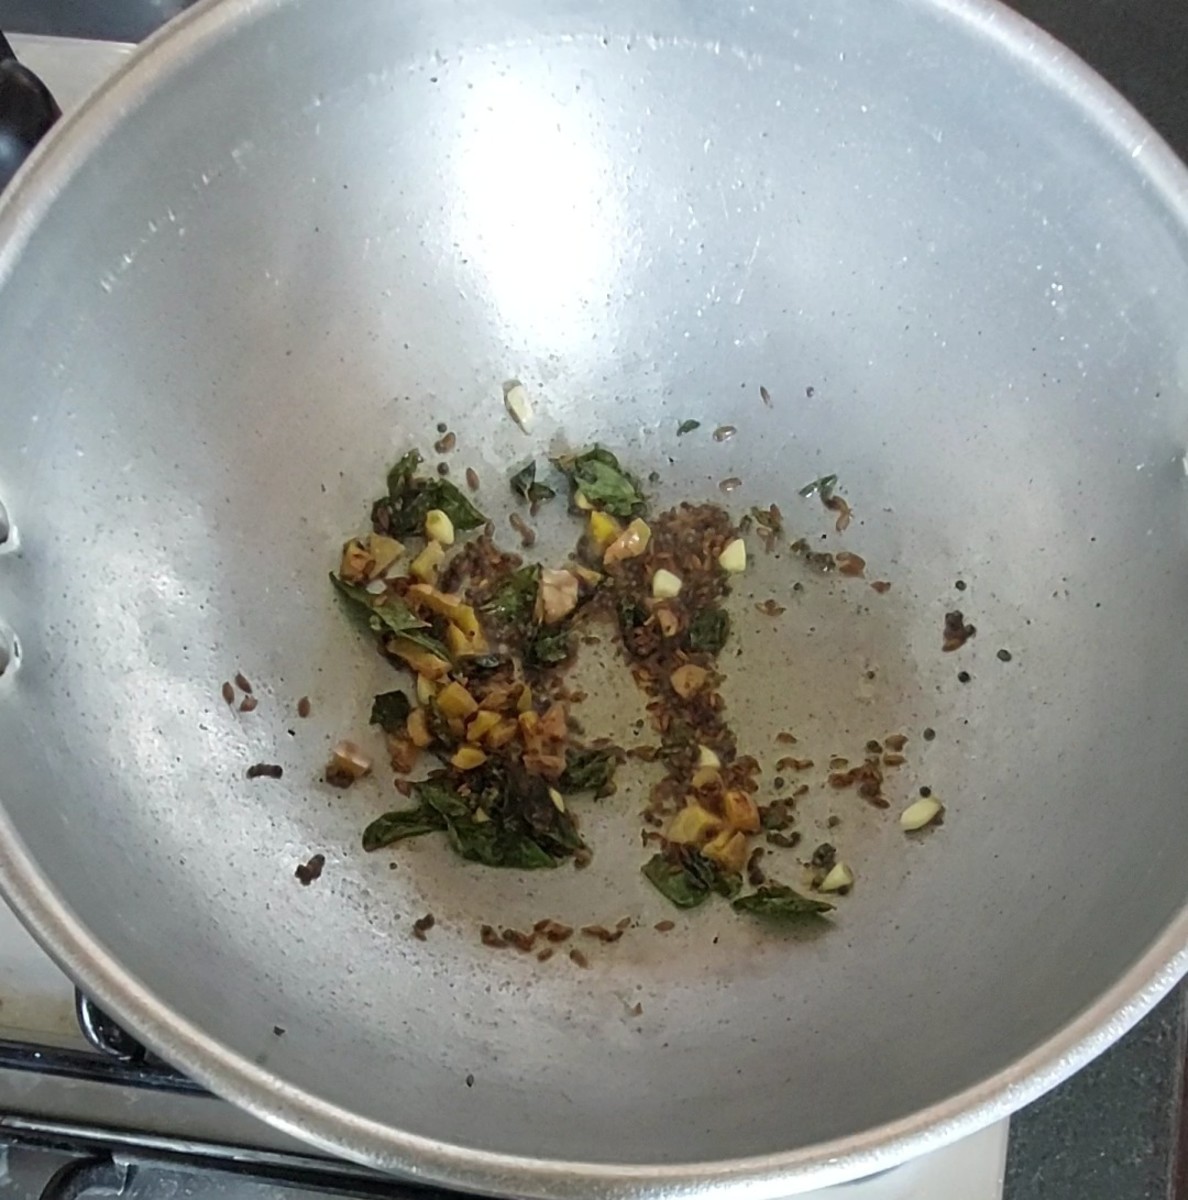 Add a chopped ginger and 3-4 chopped garlic cloves. Saute till garlic turns golden-brown.